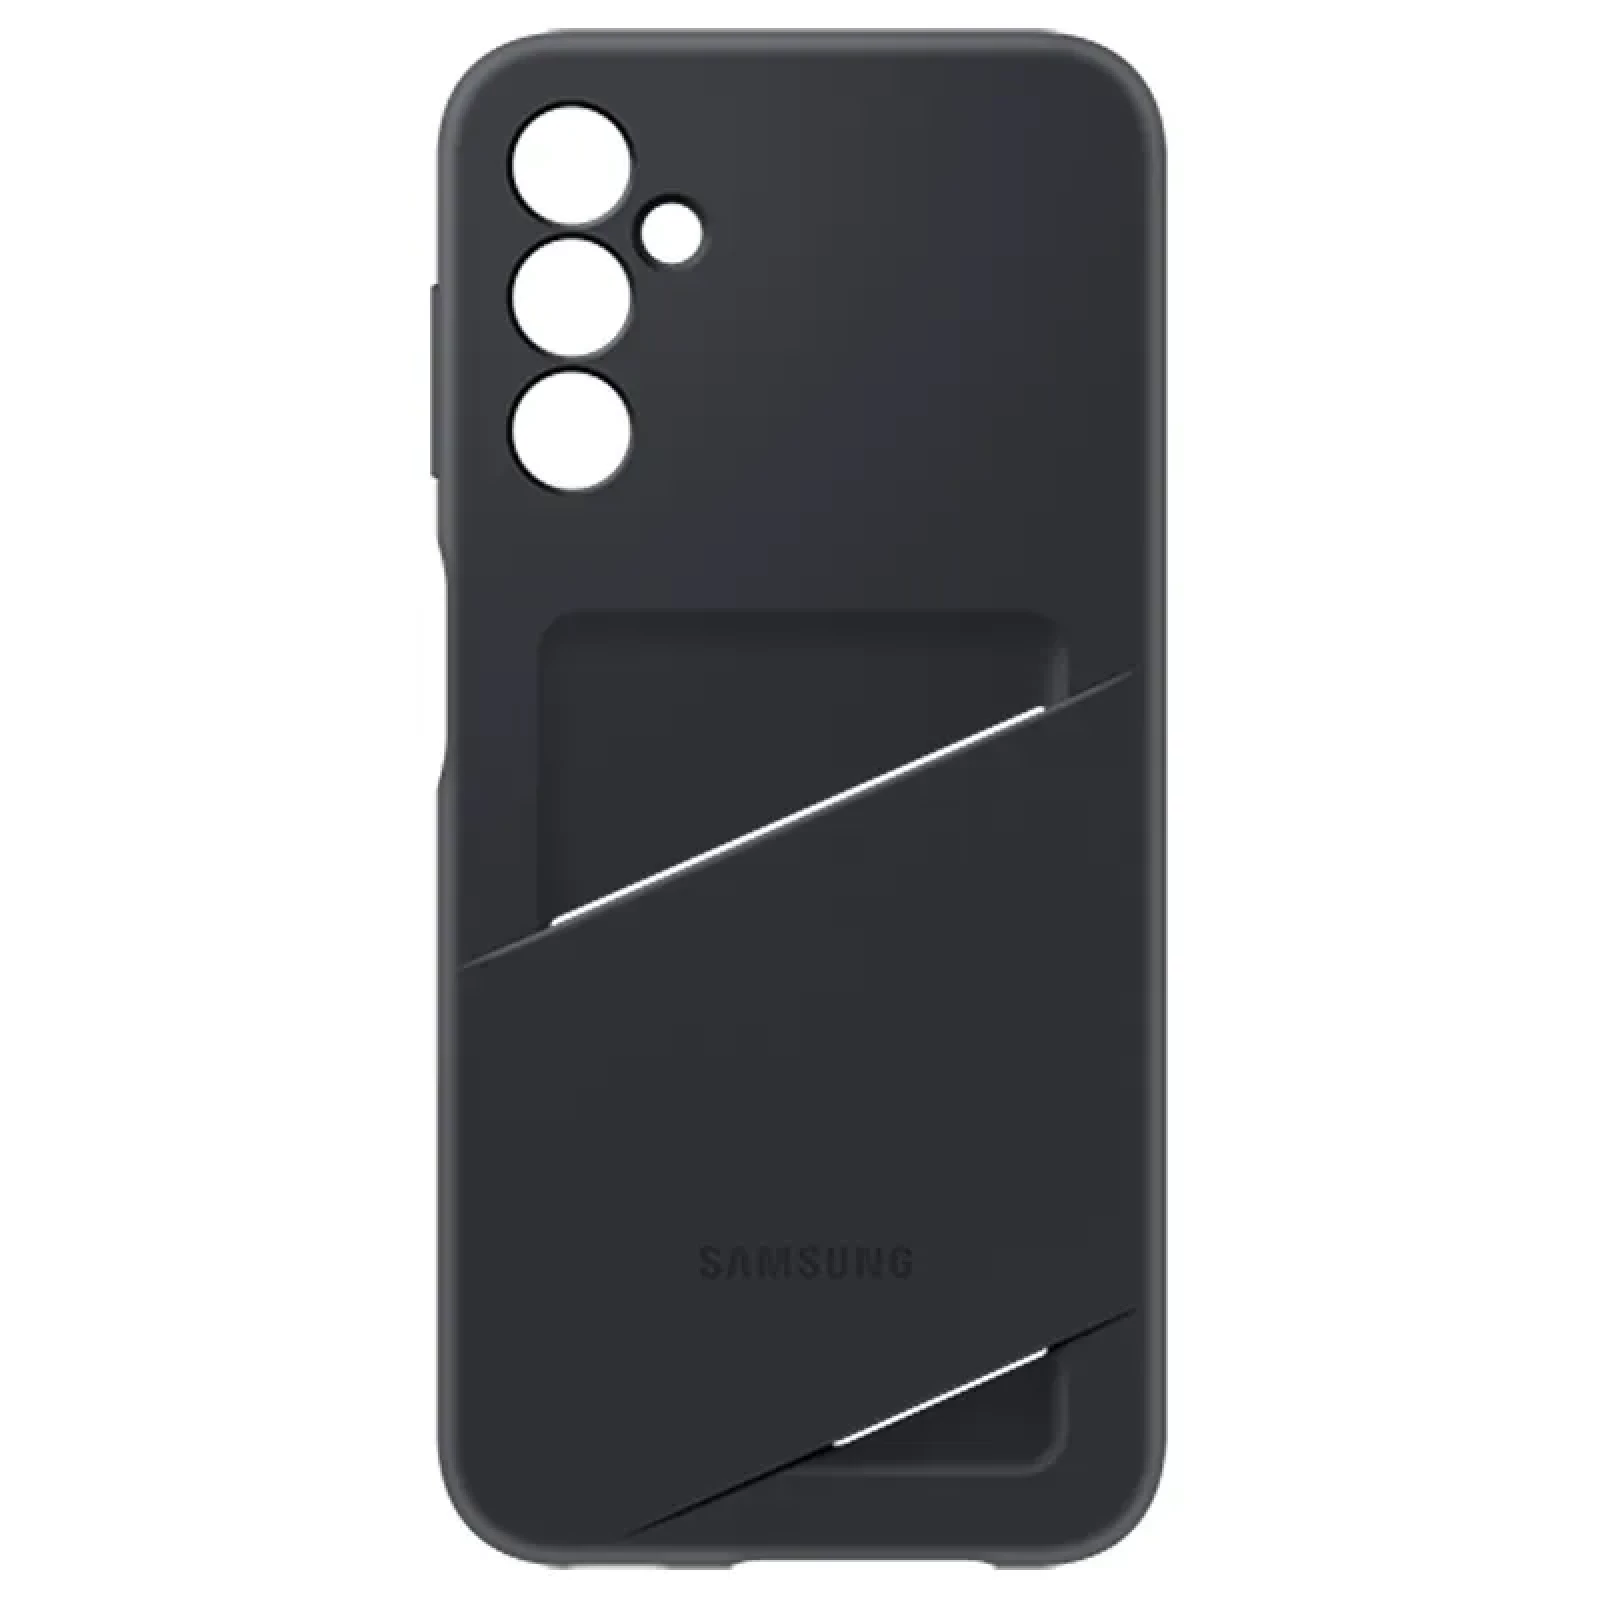 Оригинален гръб Samsung Card Slot Cover за Samsung Galaxy A14/A14 5G - Черен, EF-OA146TBE